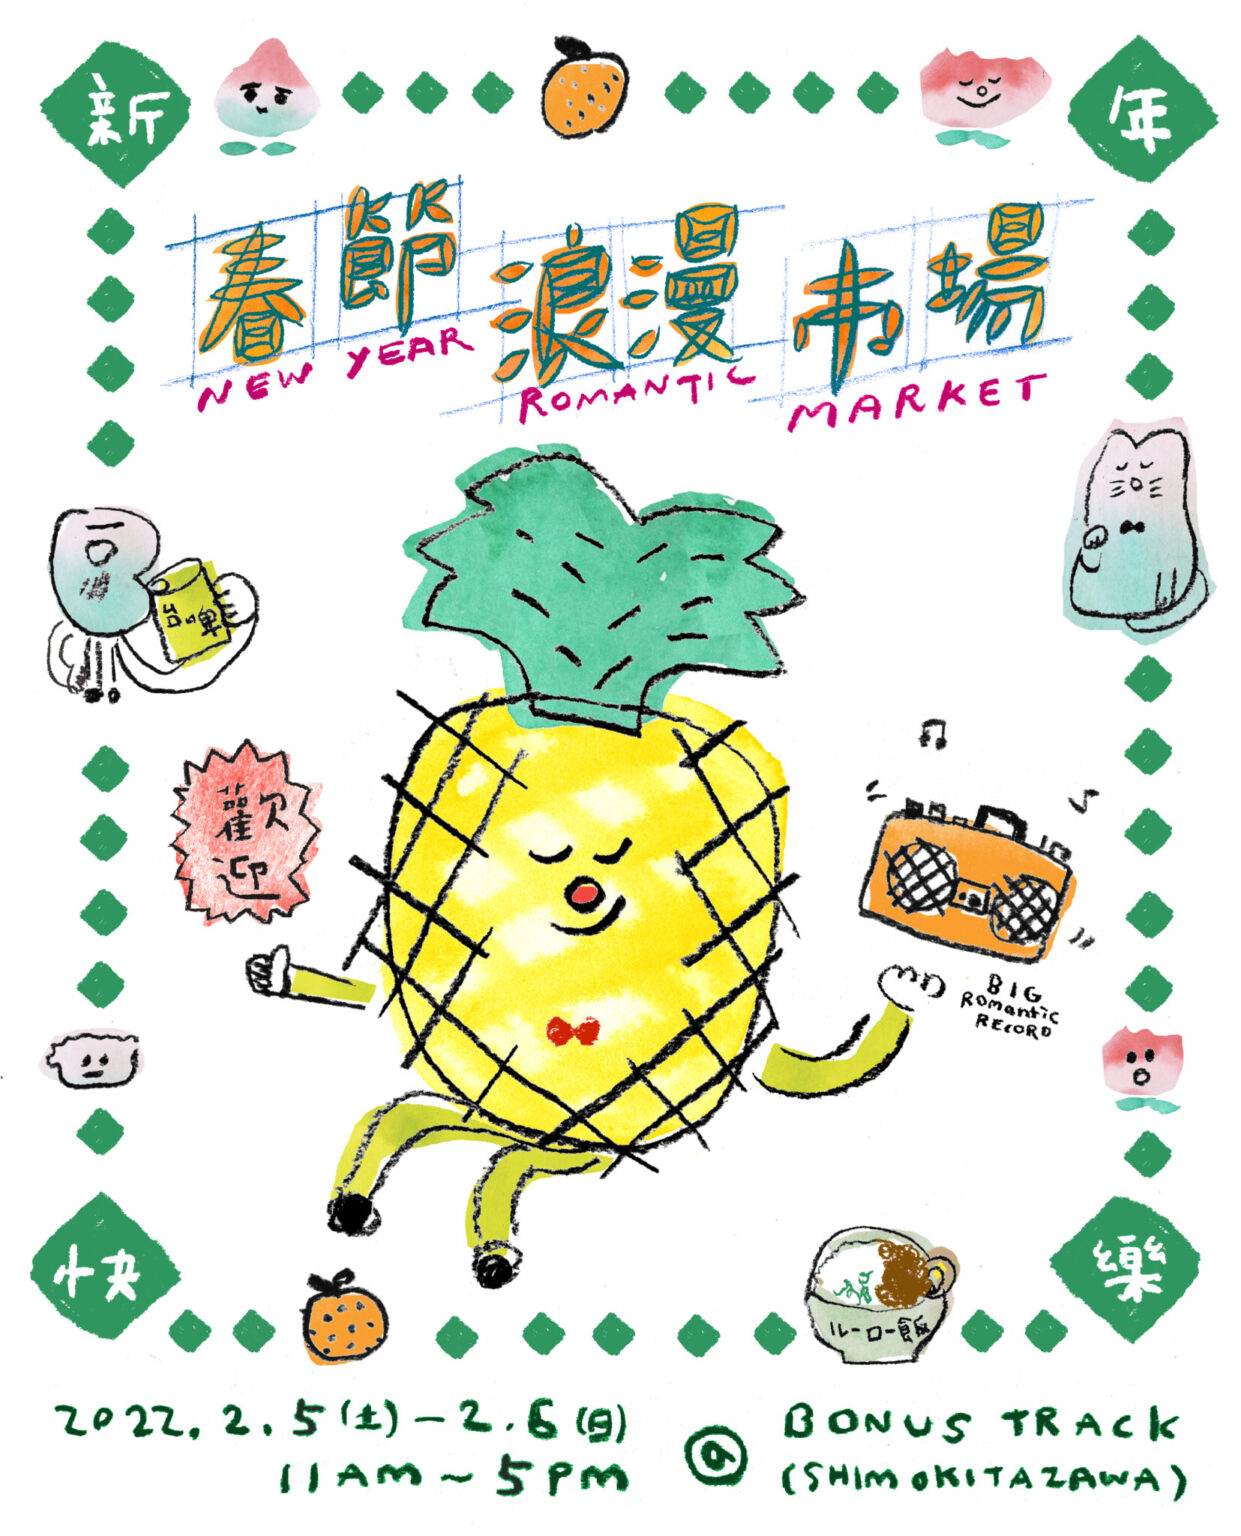 『春節浪漫市場 -New Year Romantic Market- 2022』2/5（土）、6（日）11:00〜17:00。